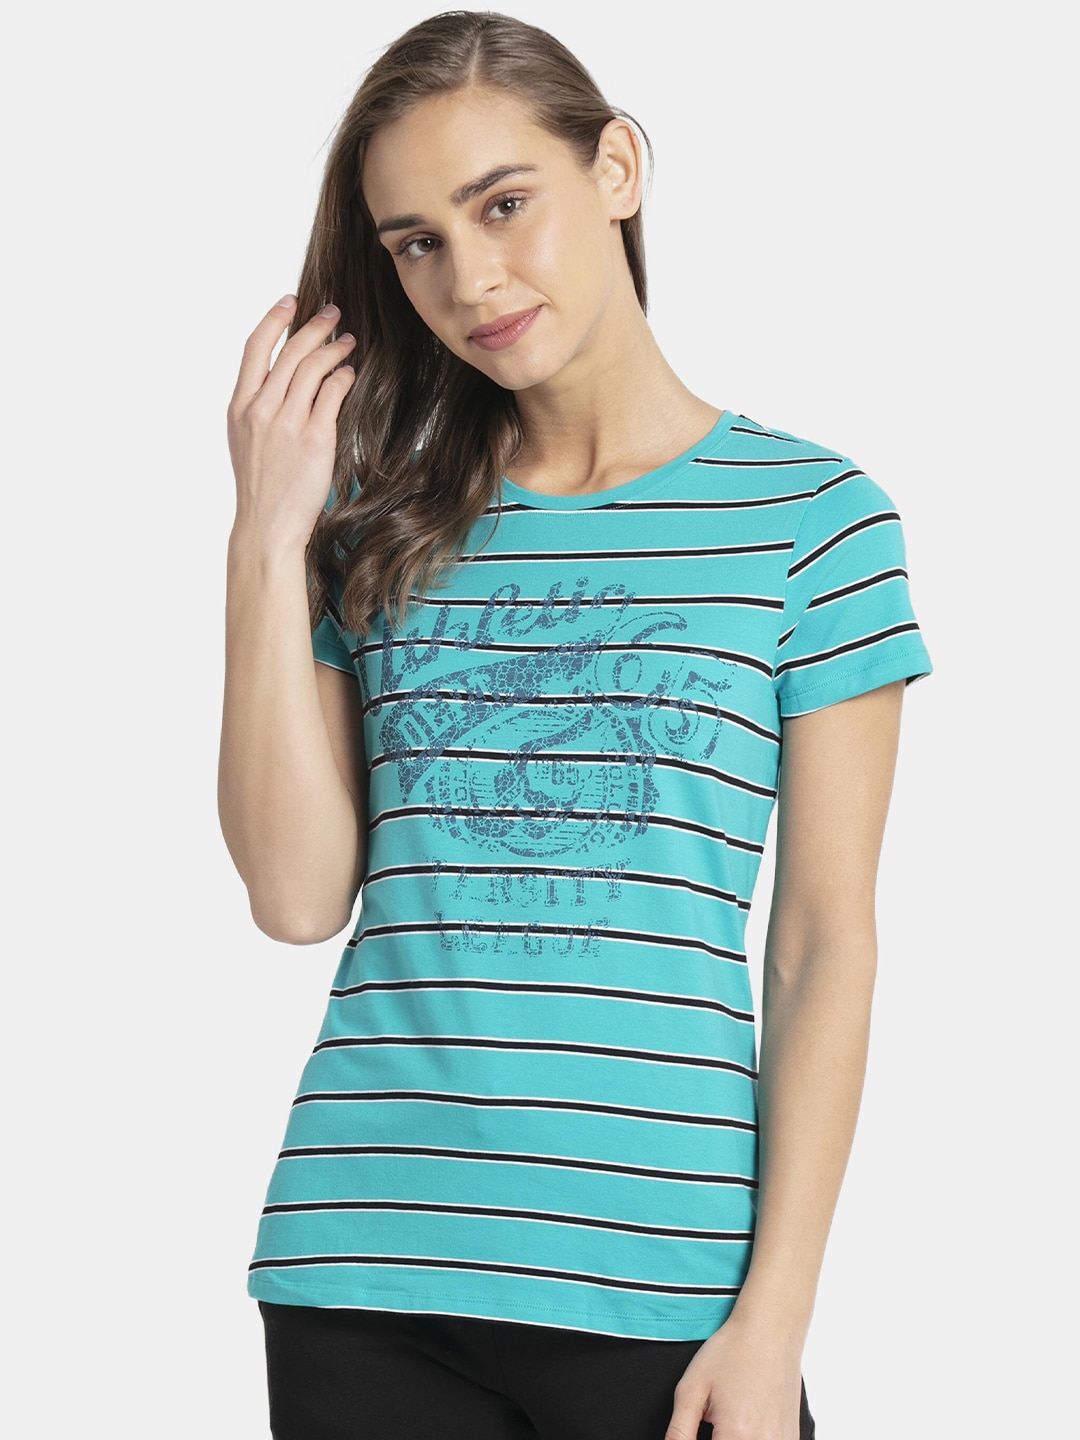 Jockey Women Teal Blue & Black Striped Lounge T-shirt Price in India